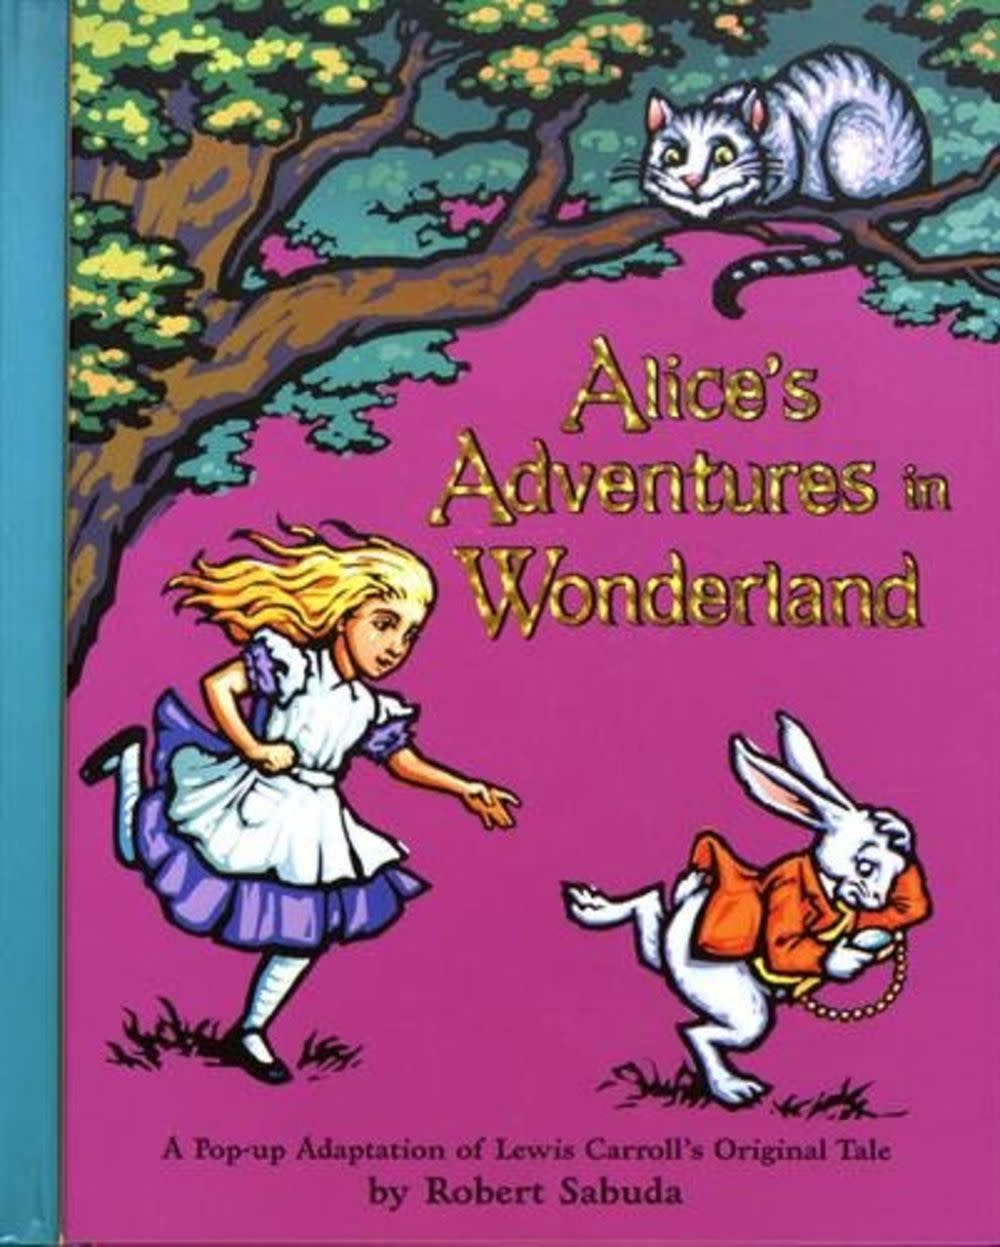 Alices Adventures in Wonderland, by Robert Sabuda